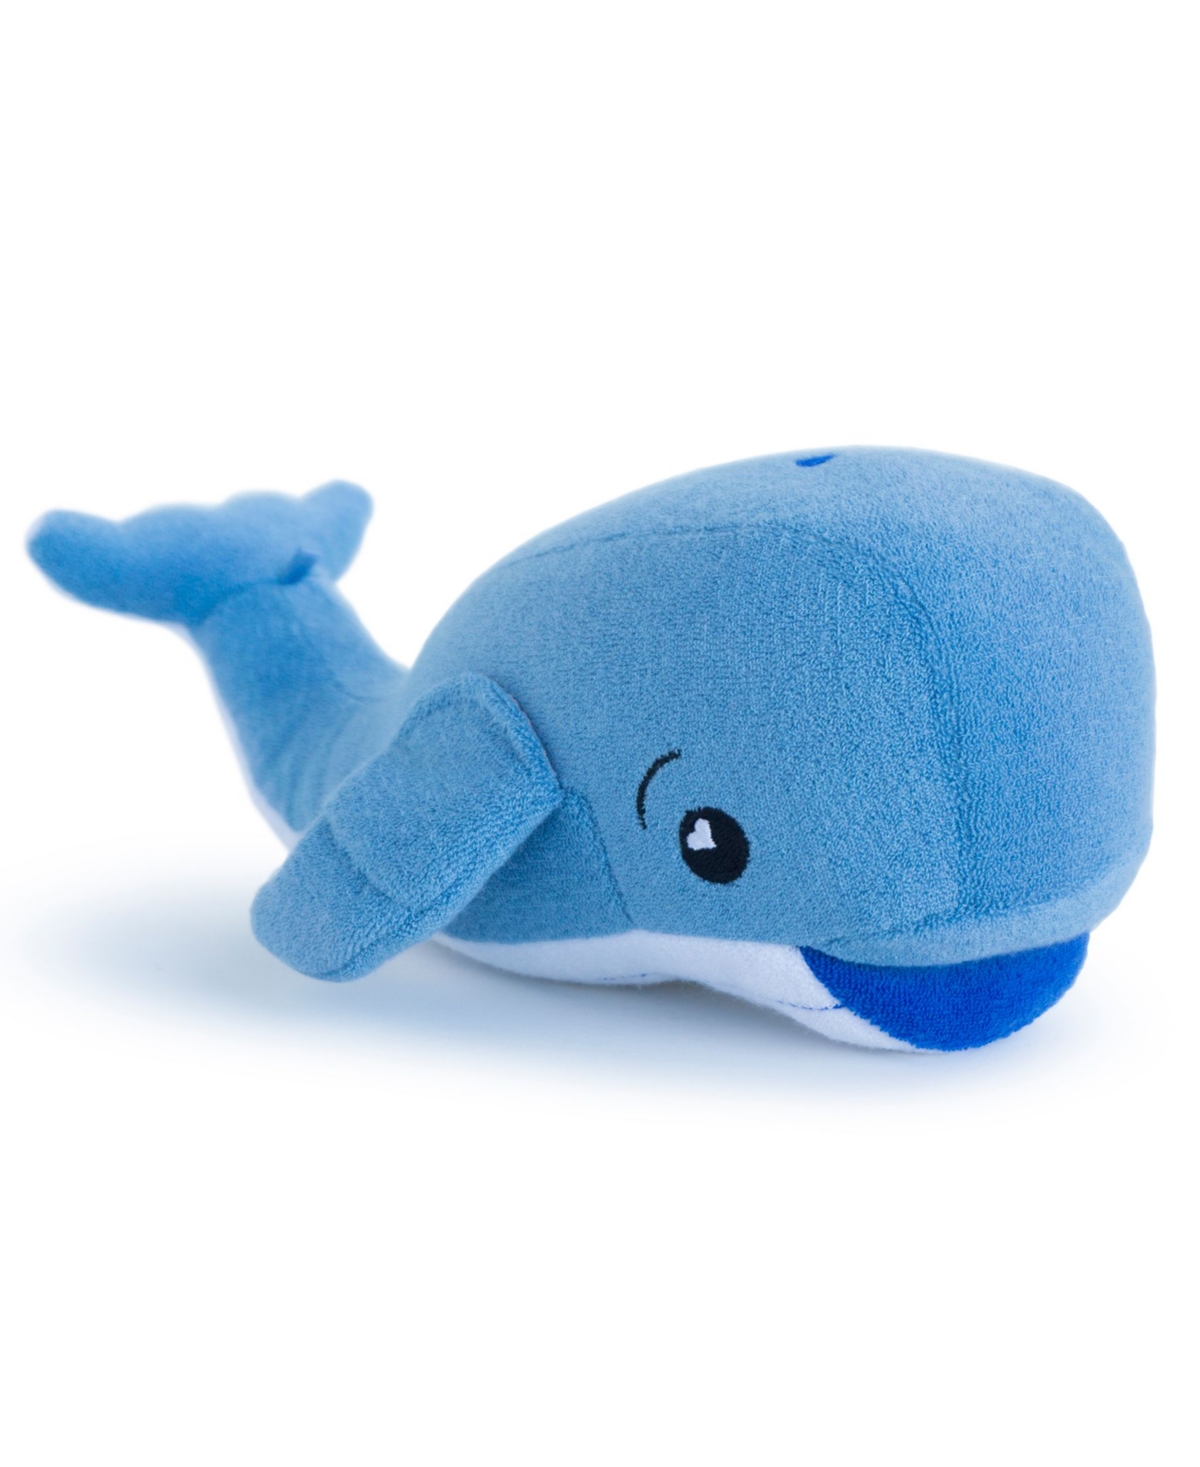 Soapsox Babies' Jackson The Whale Bath Toy Sponge In Blue,white